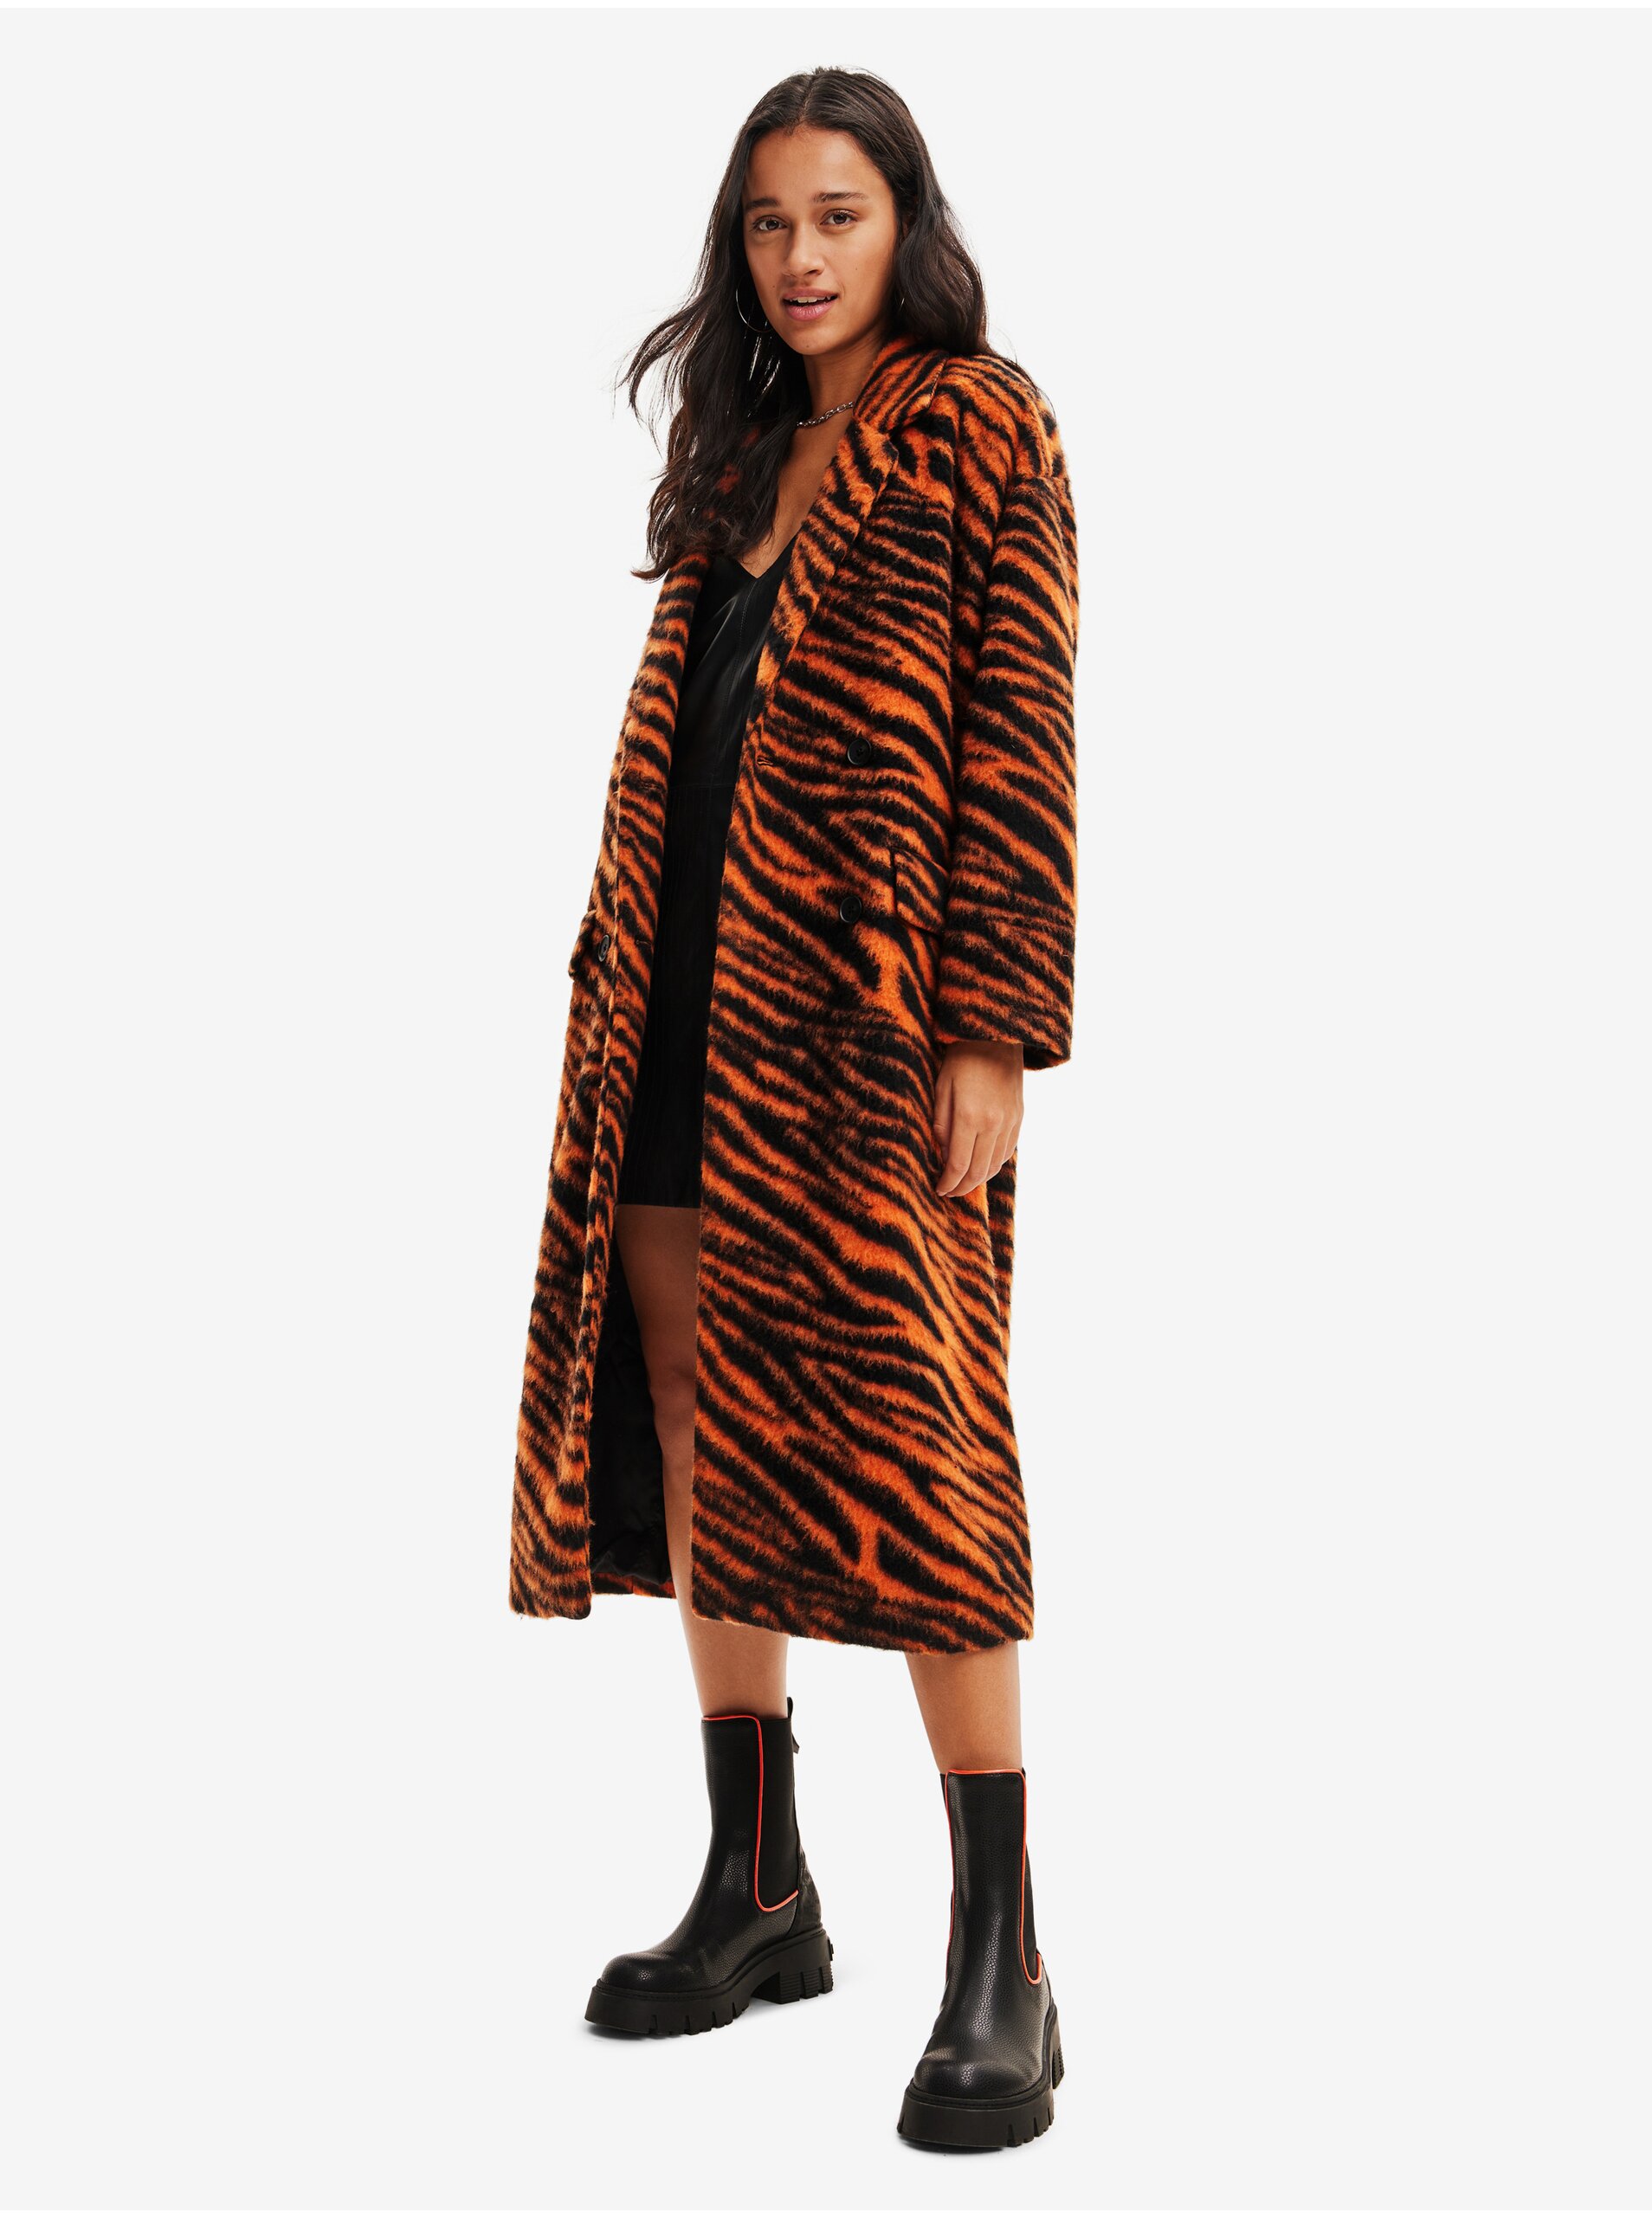 Orange Desigual Esmeralda Patterned Coat for Women - Women